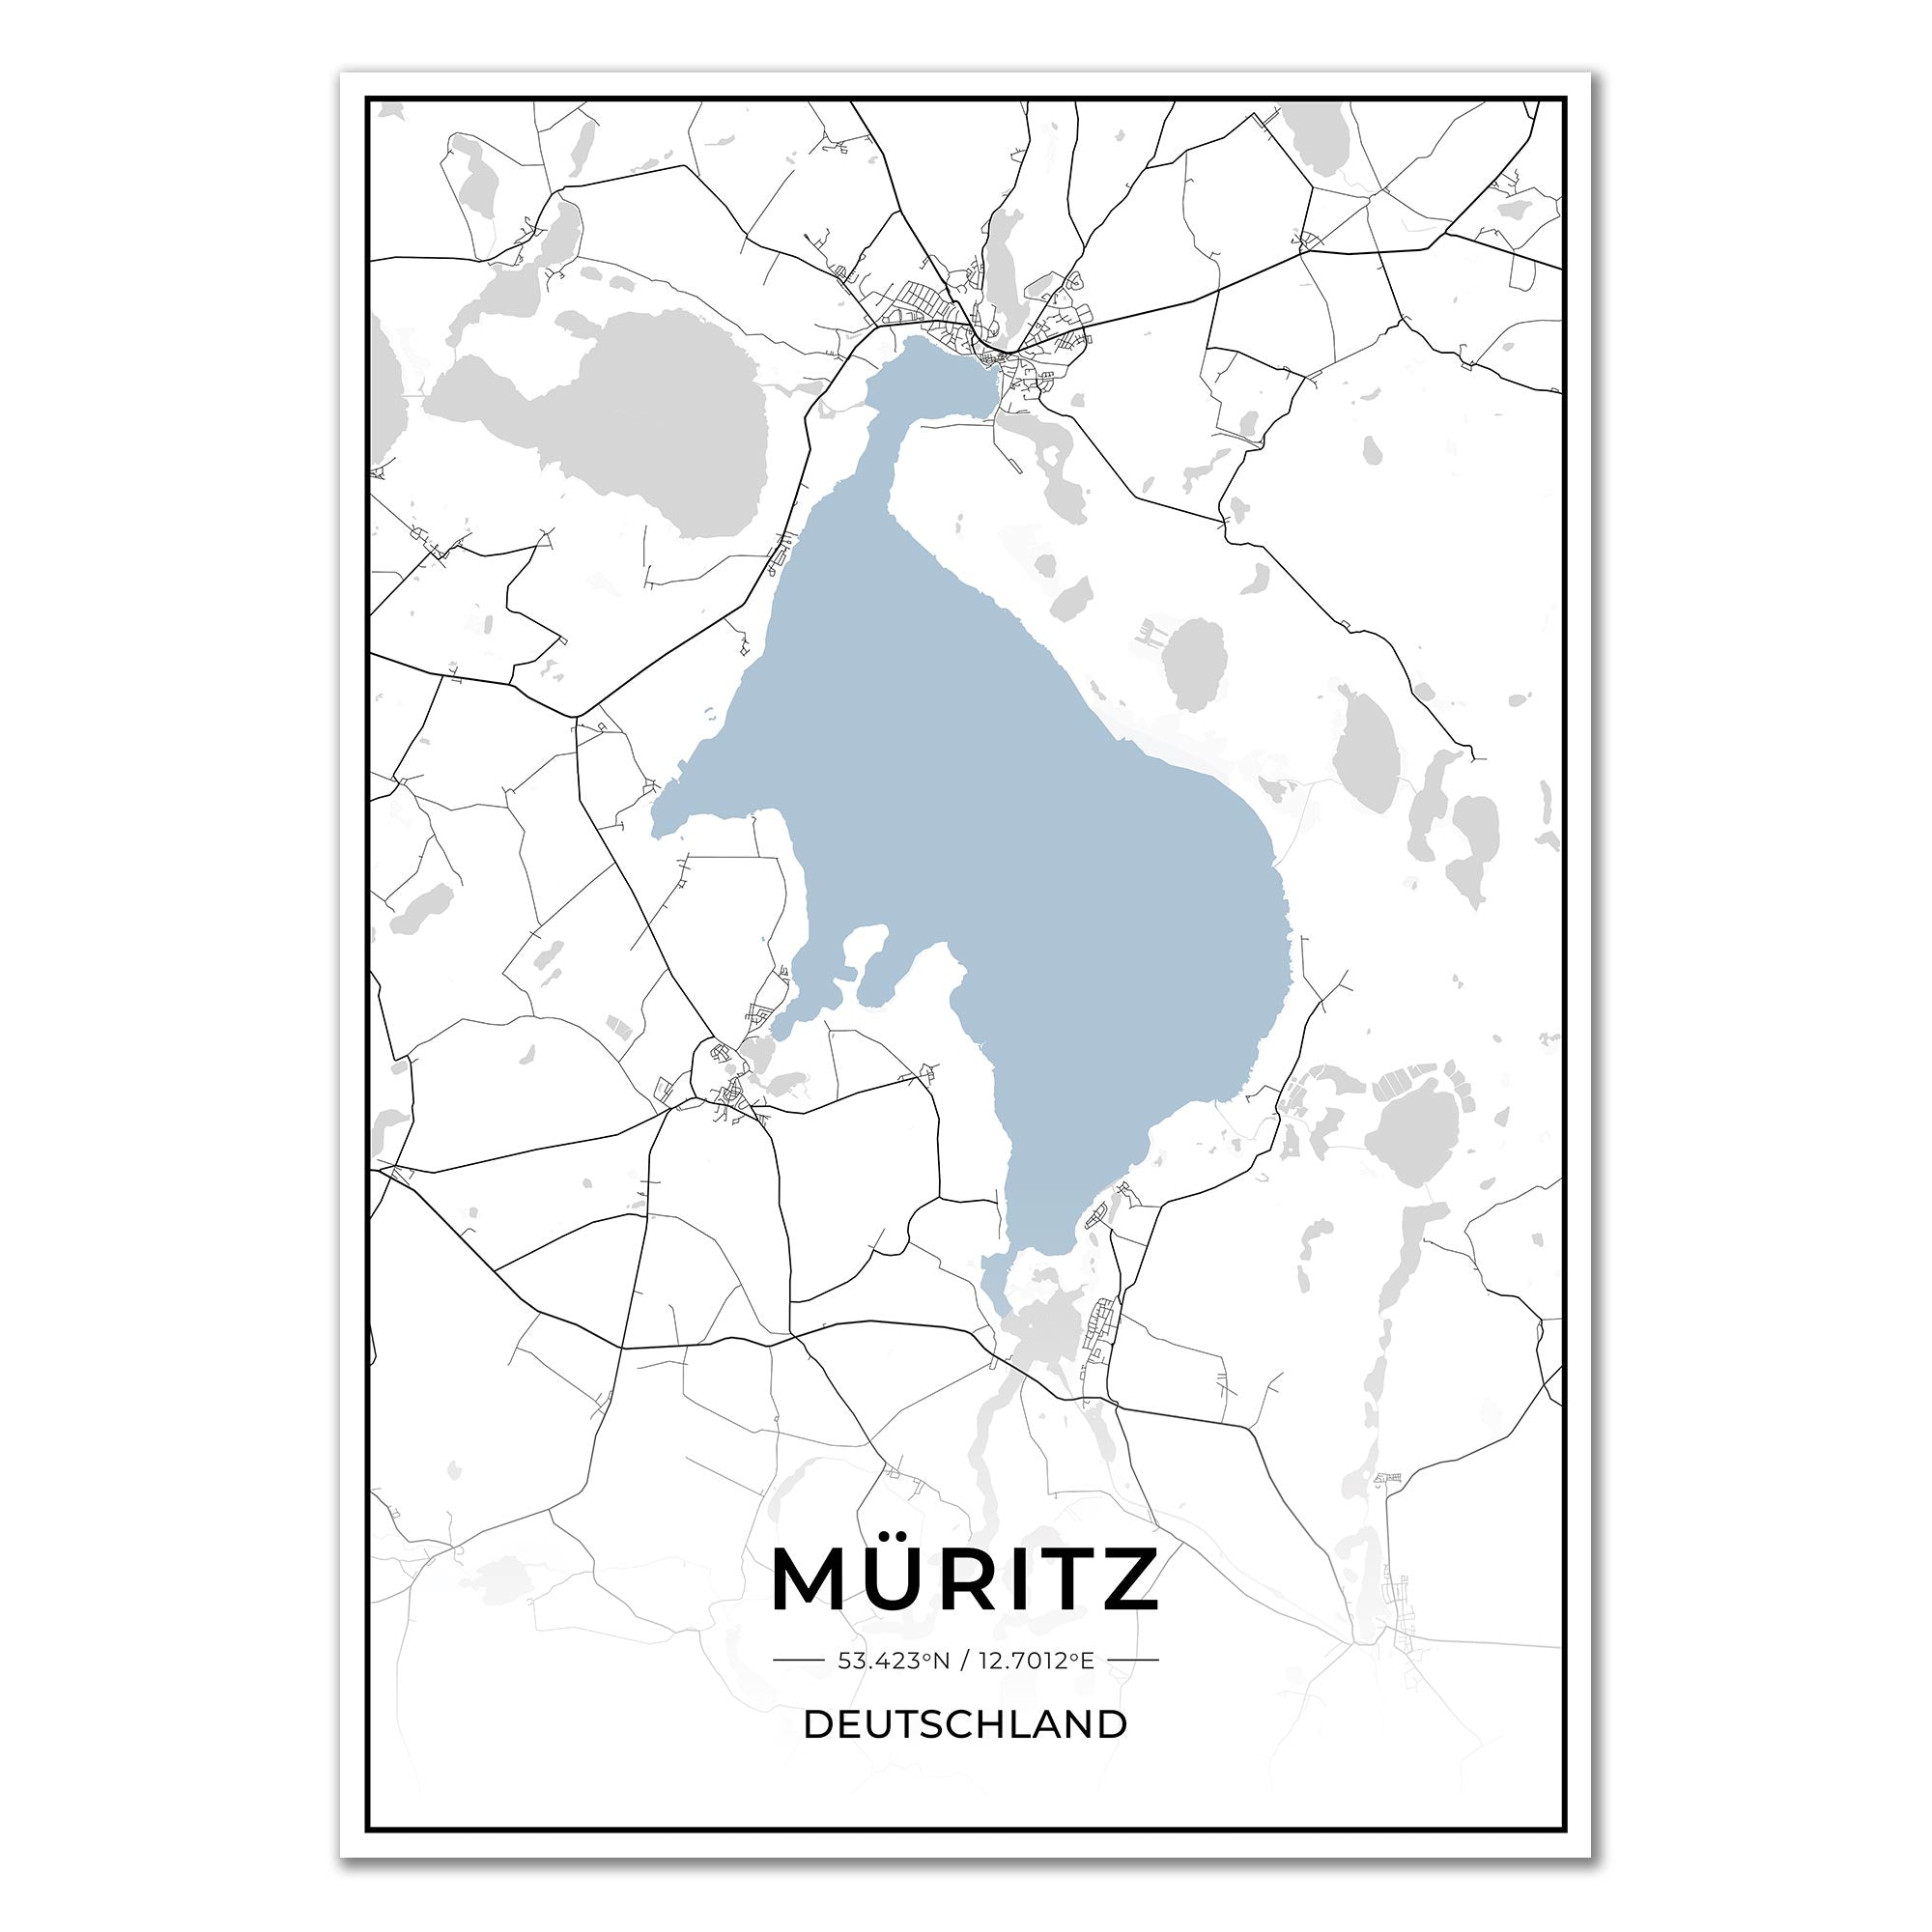 See Karten Poster - Müritz